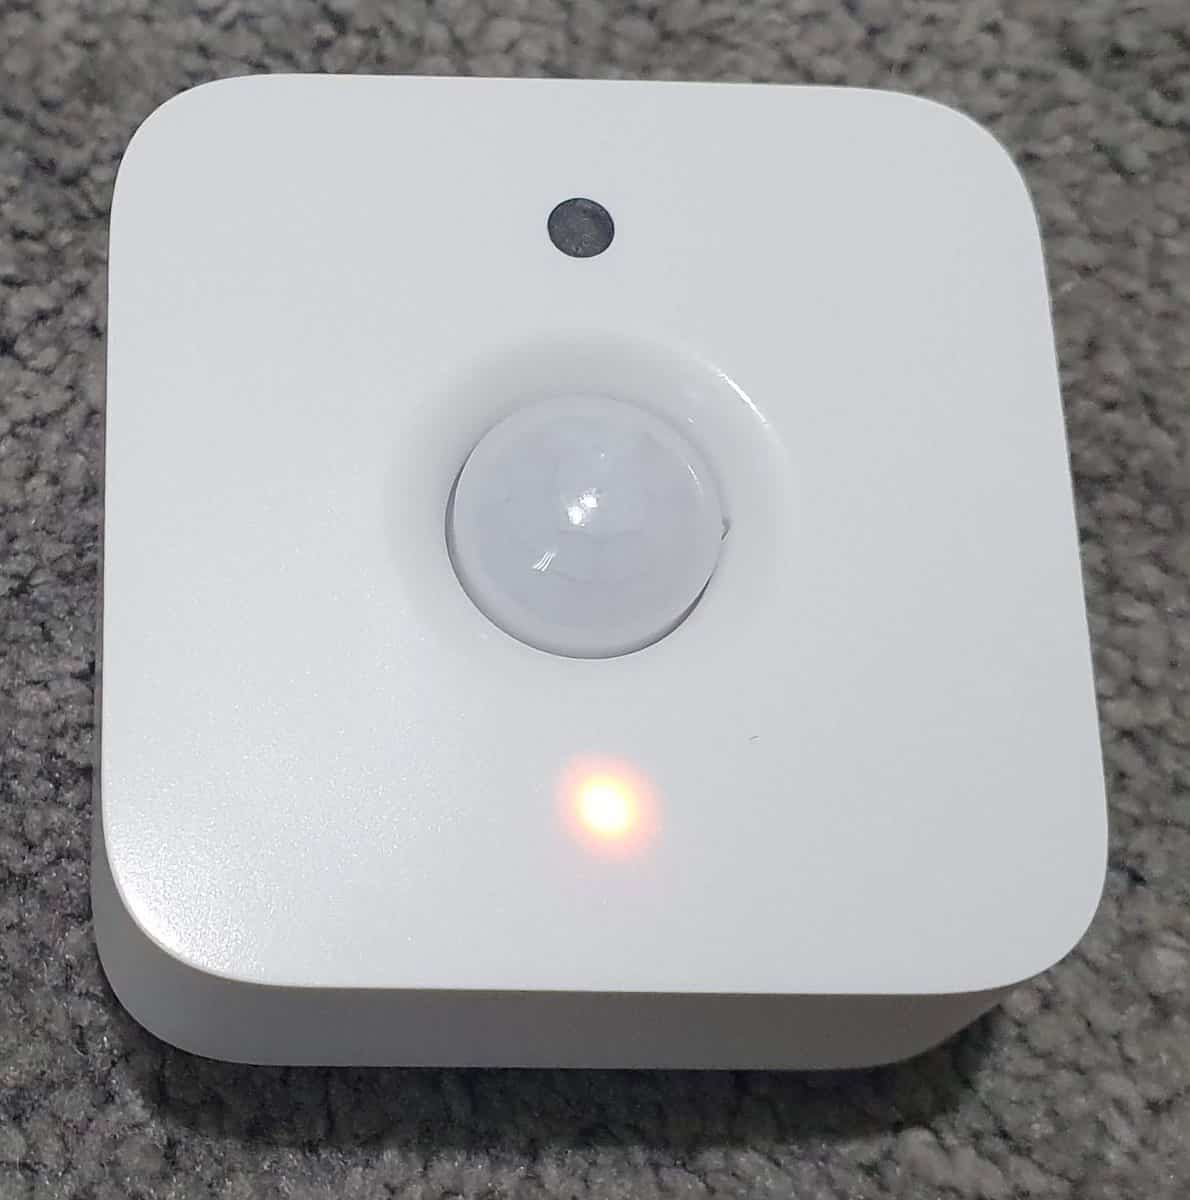 Philips Hue Motion Sensor Light Information Smart Home Point